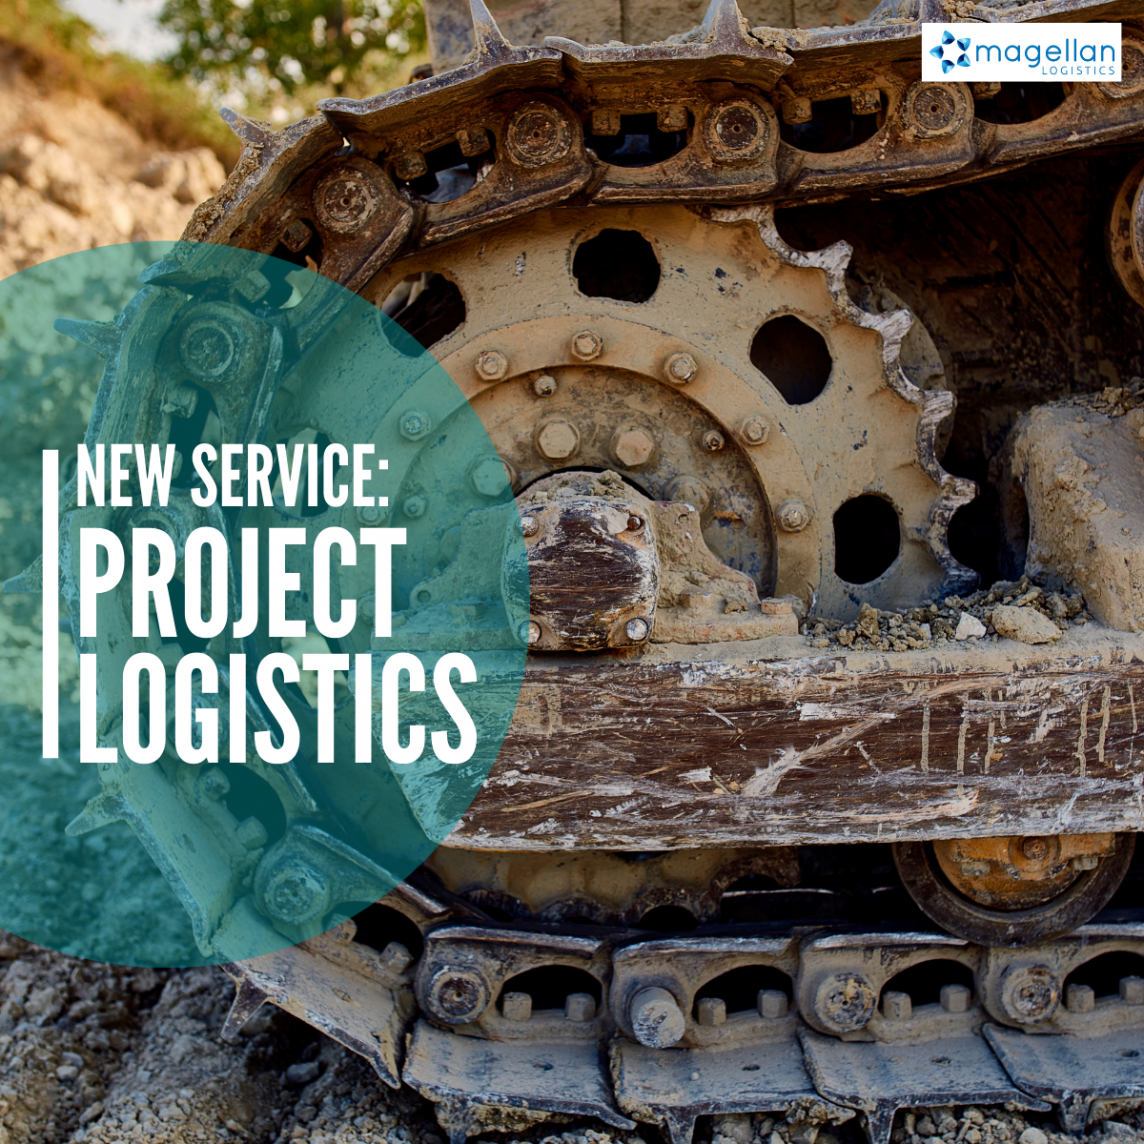 Magellan expands into Project Logistics